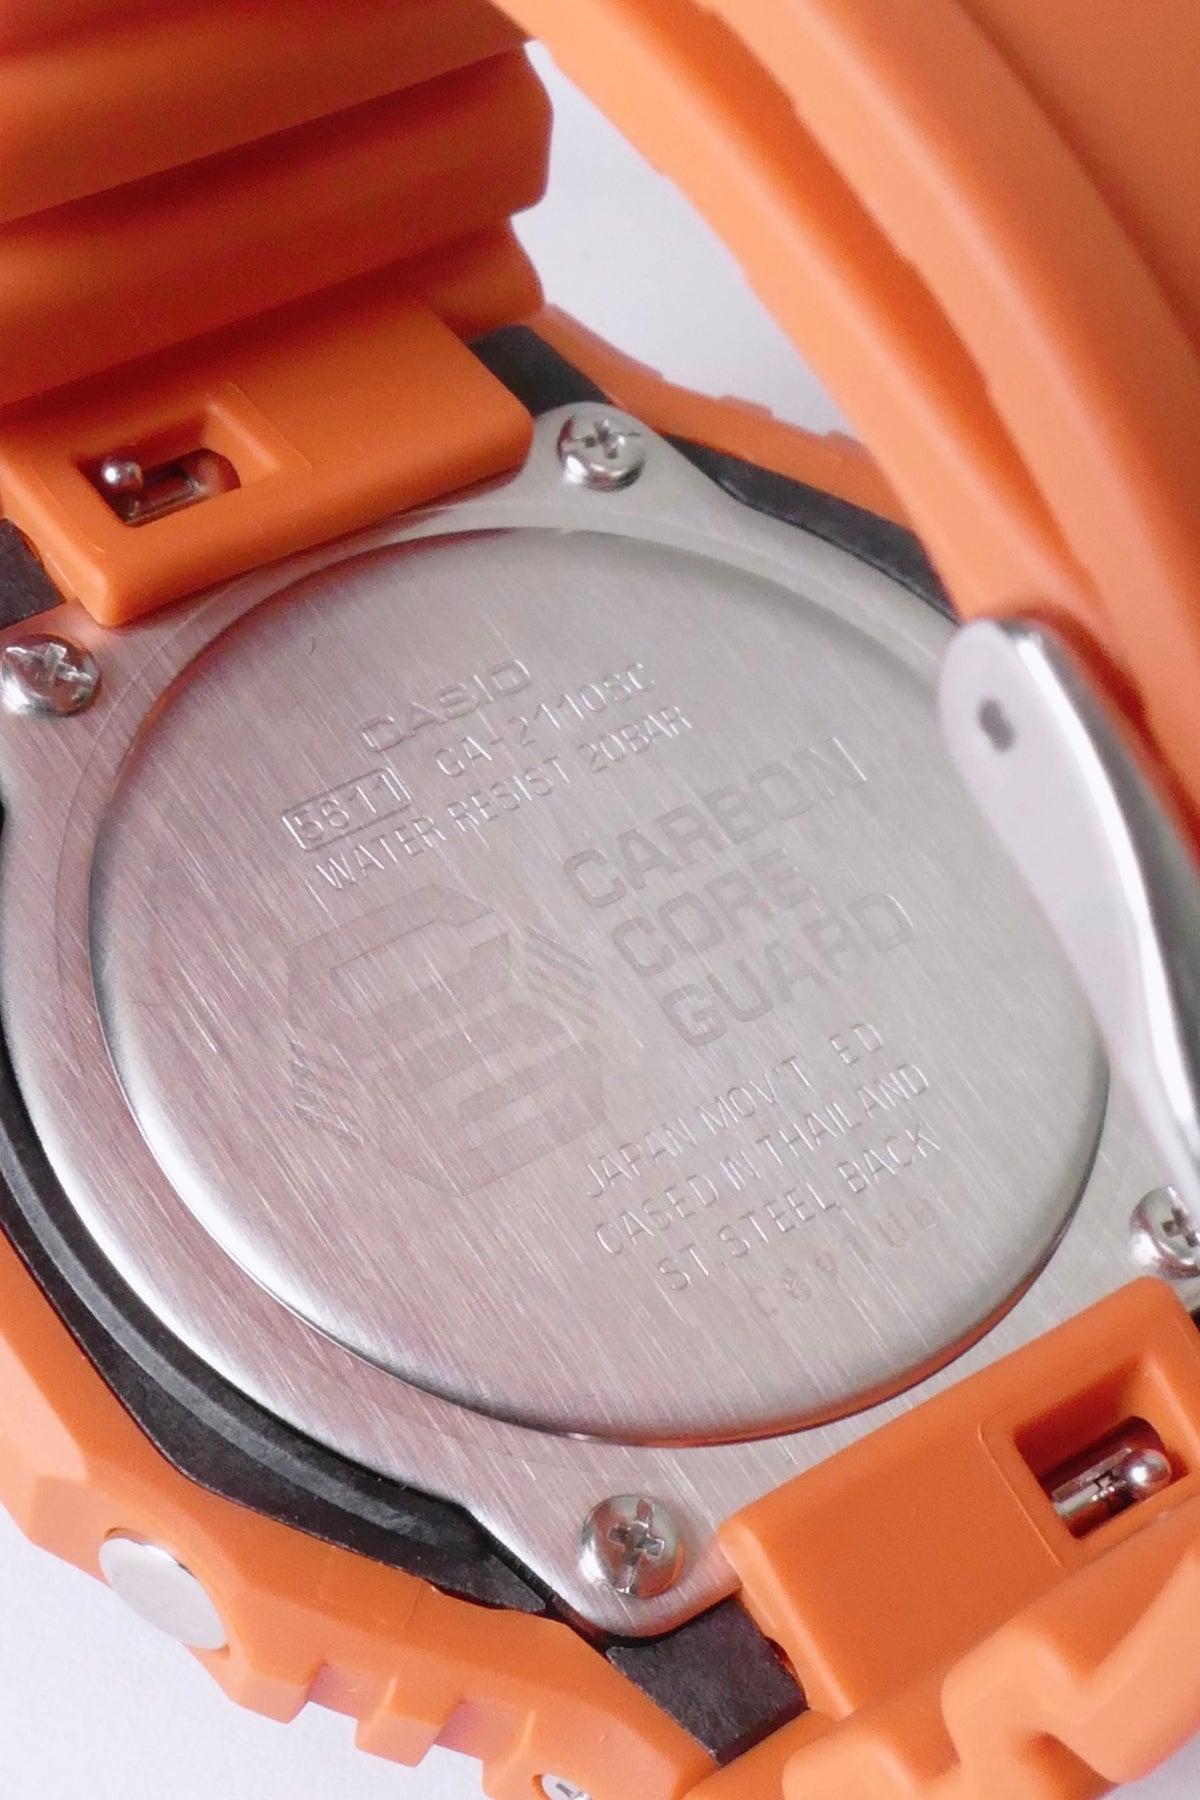 G-Shock GS-GA2110SC4A Watch - Orange/Green